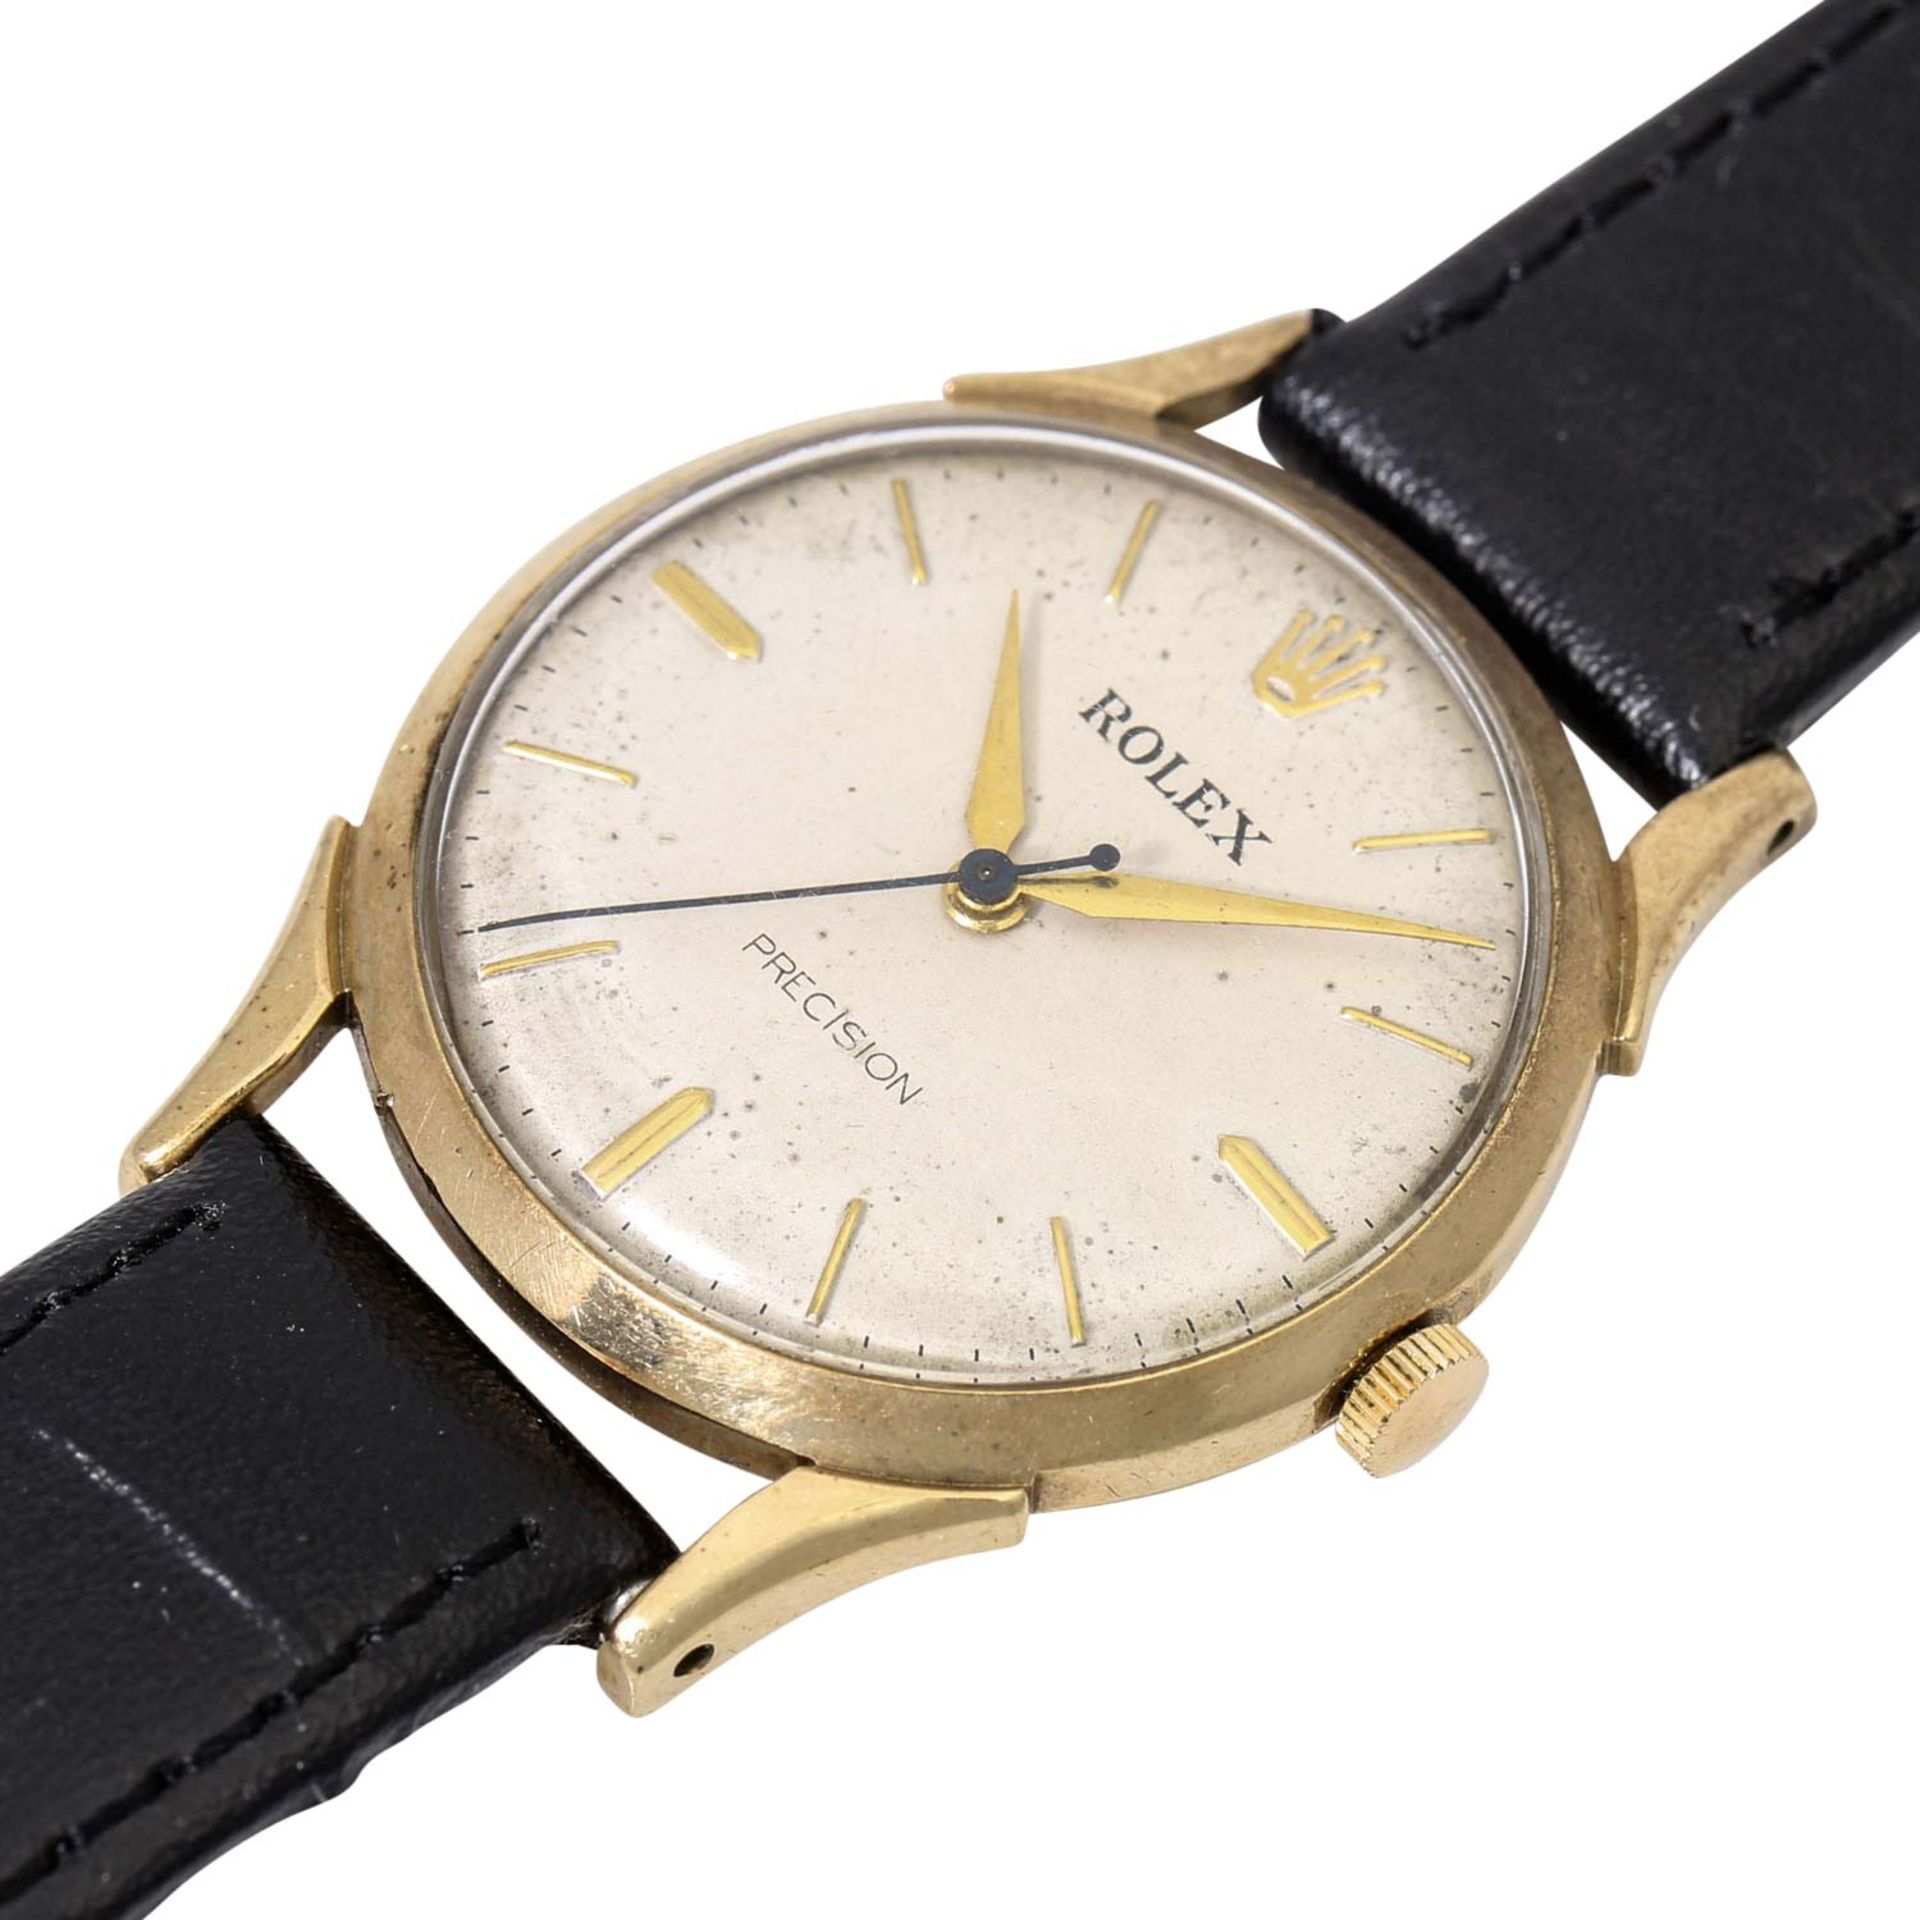 ROLEX Vintage Precision Armbanduhr. Ca. 1940er Jahre. - Bild 5 aus 7